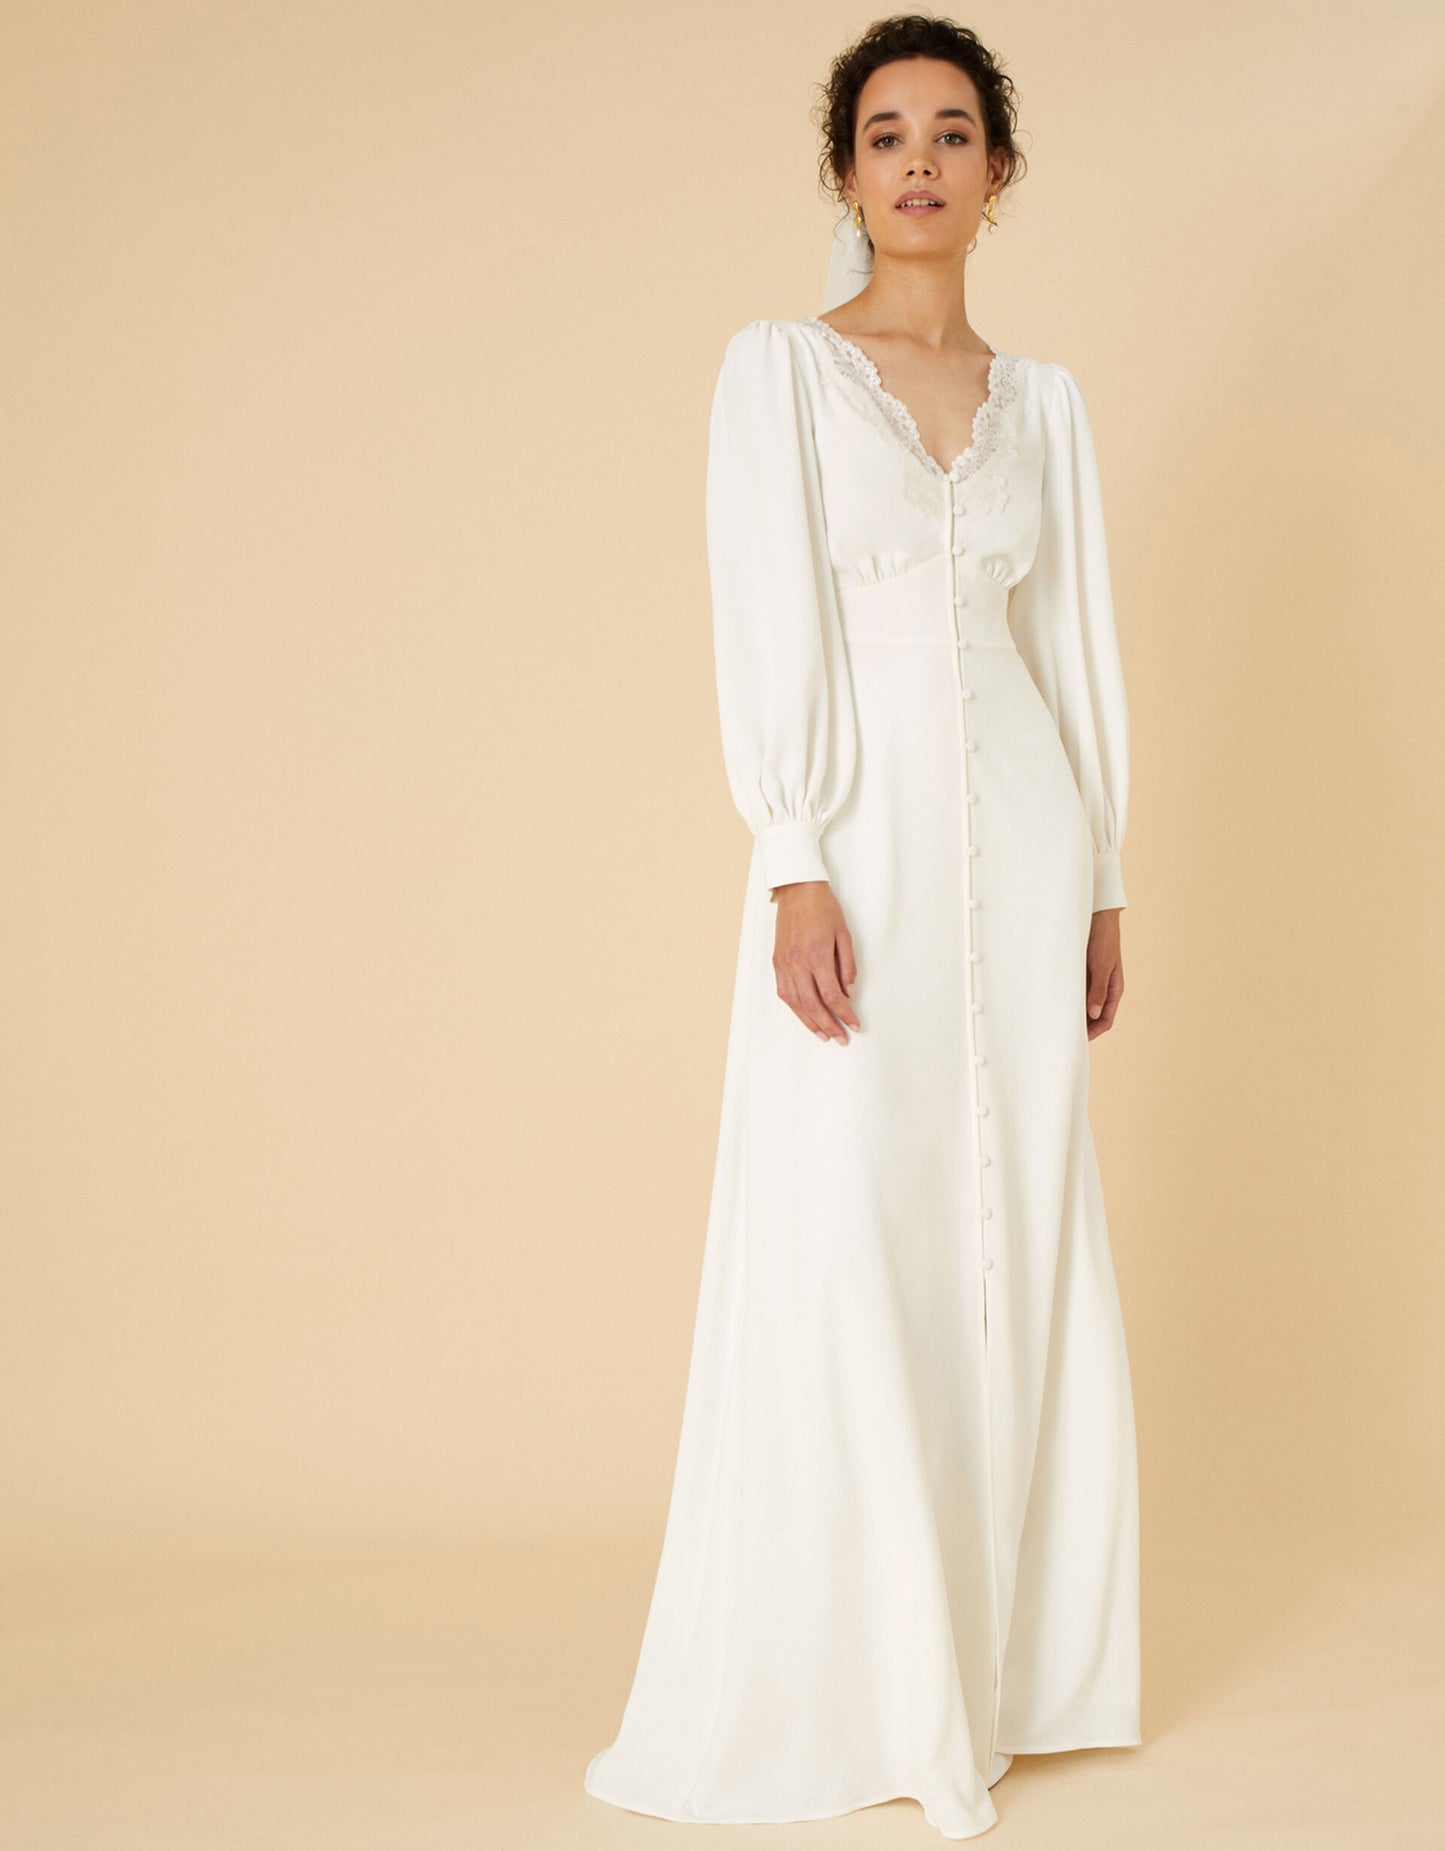 Cecilia long sleeve bridal lace dress ivory